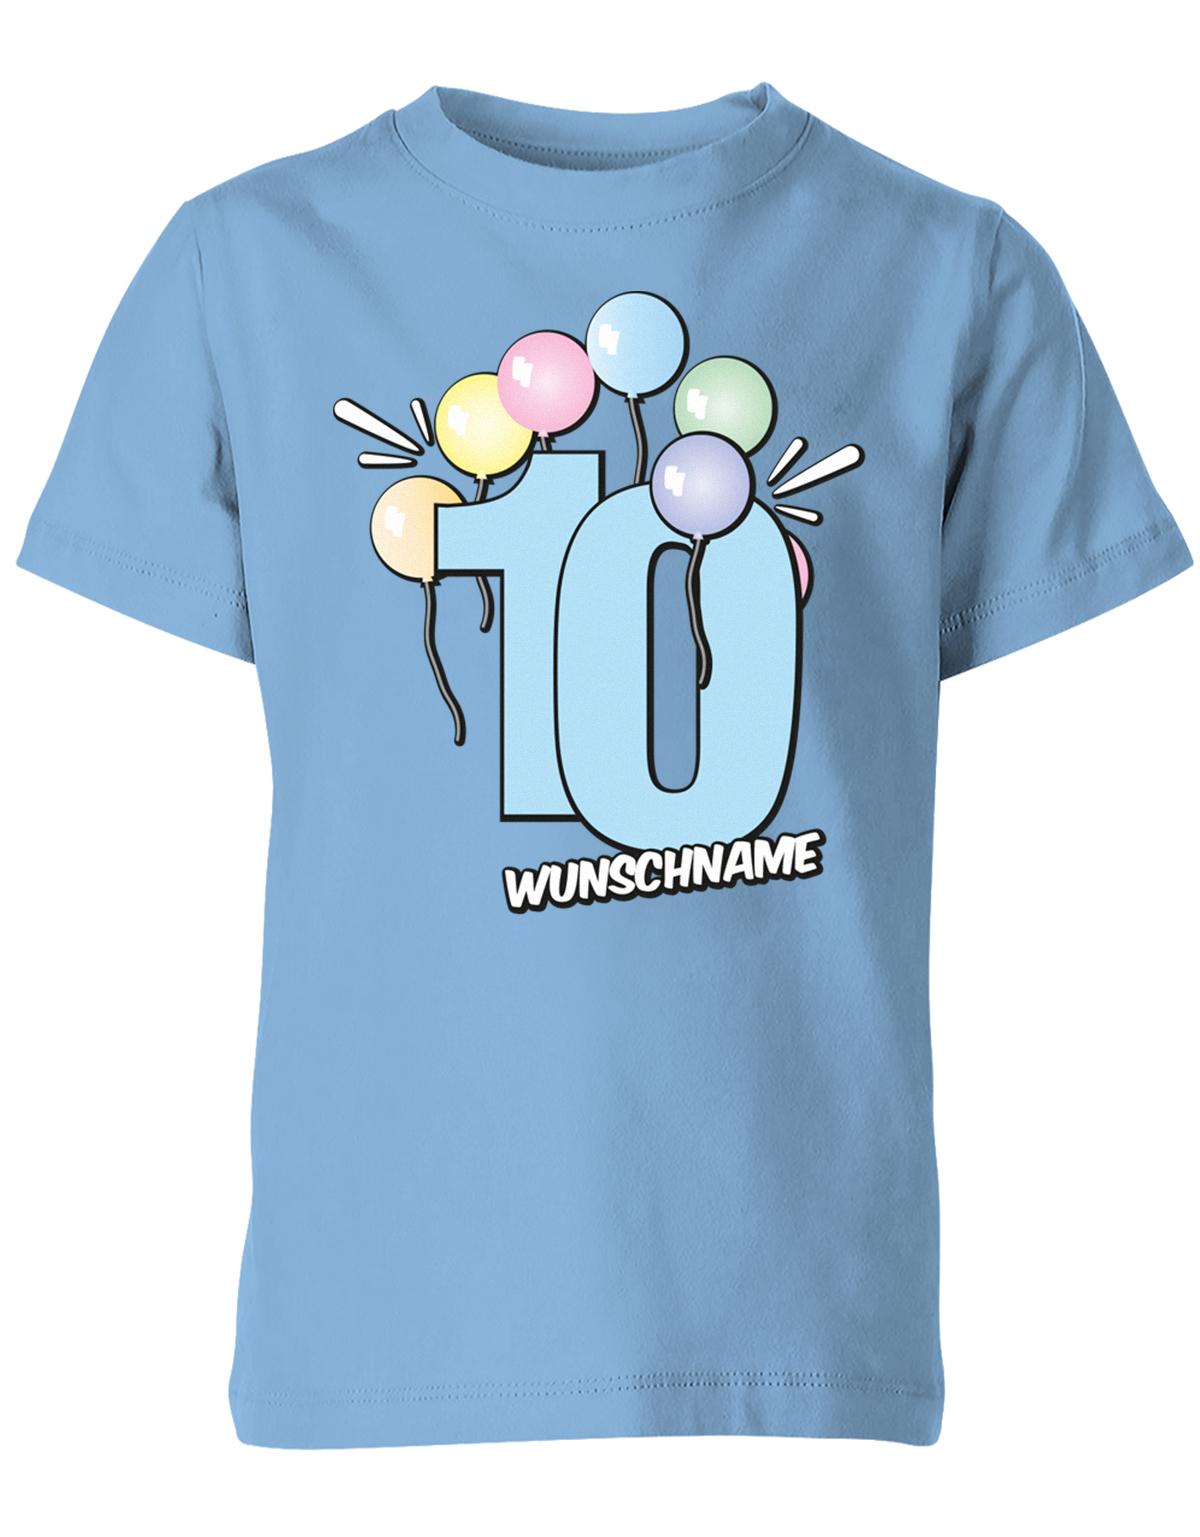 Luftballons-pastell-10-geburtstag-wunschname-kinder-shirt-hellblau